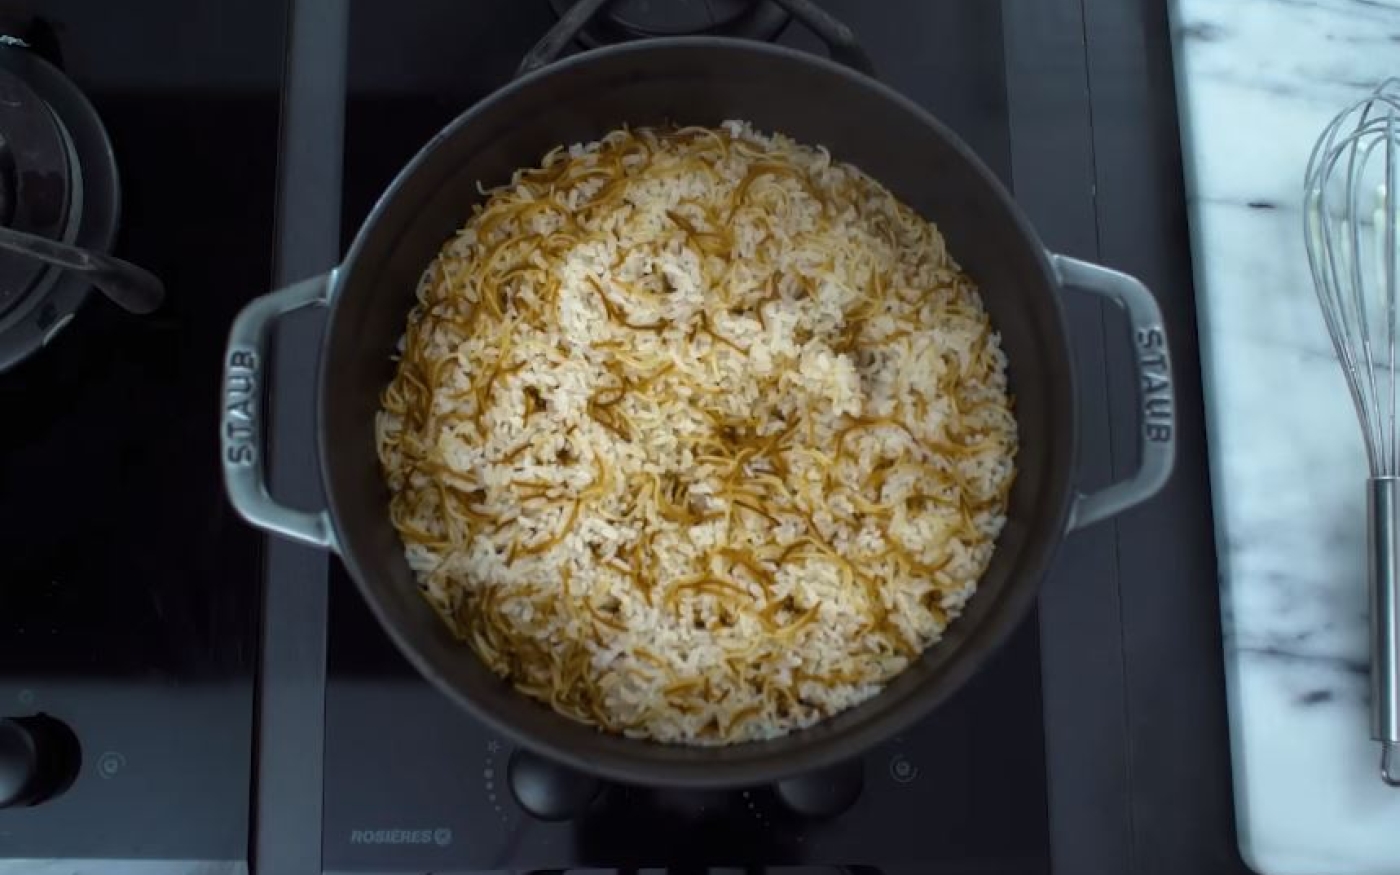 Le riz absorbe l’onctuosité du yaourt (Dalia’s kitchen/YouTube)